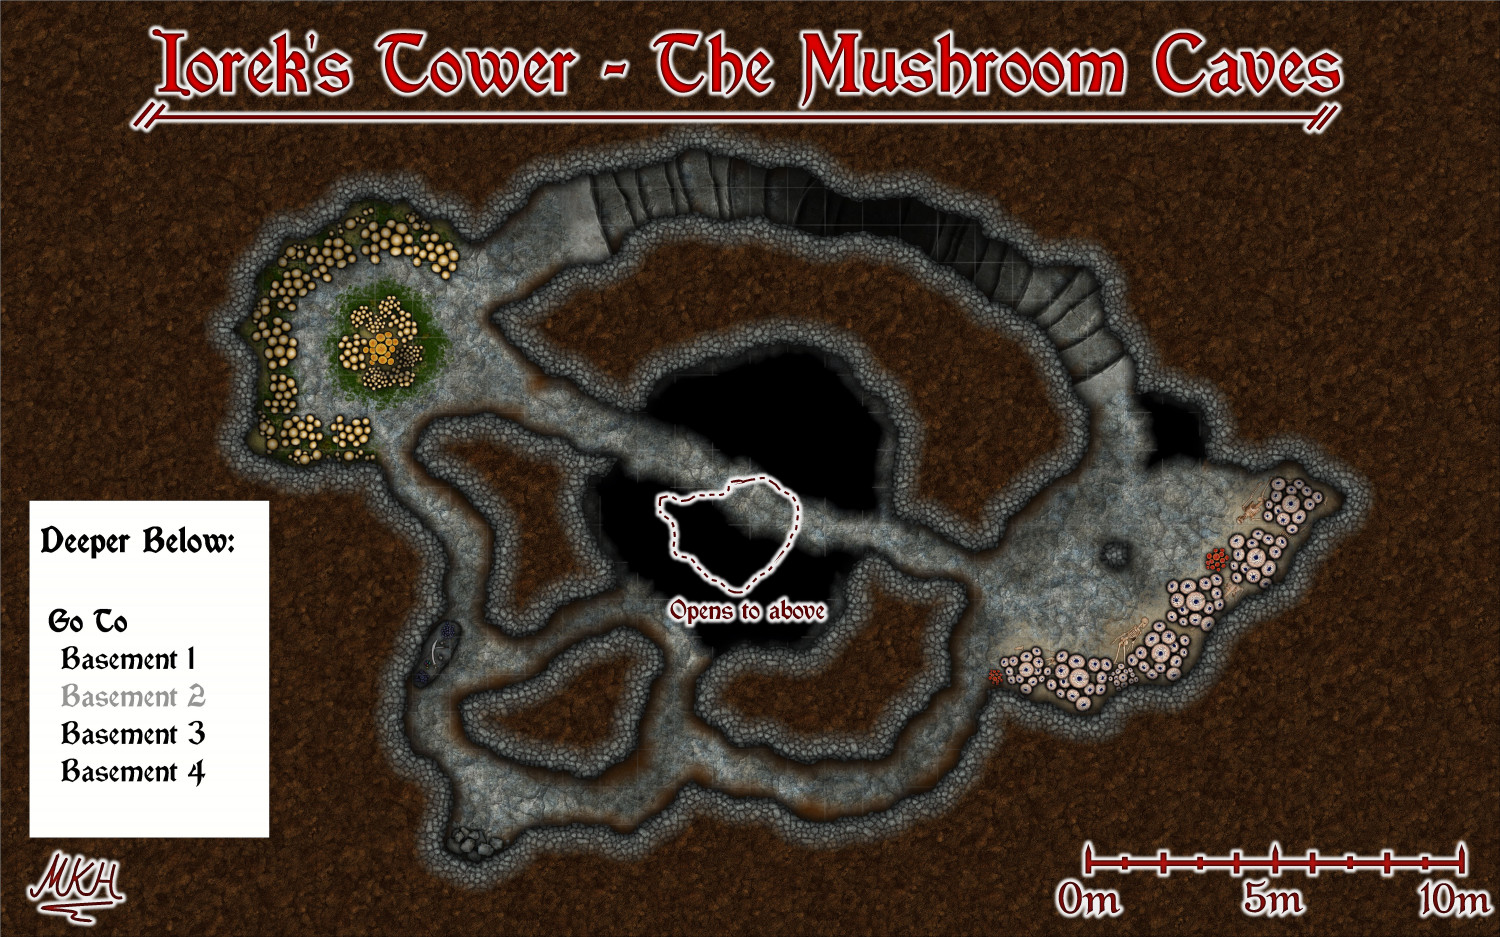 Tower Celllars_Mushroom Caves 4.JPG